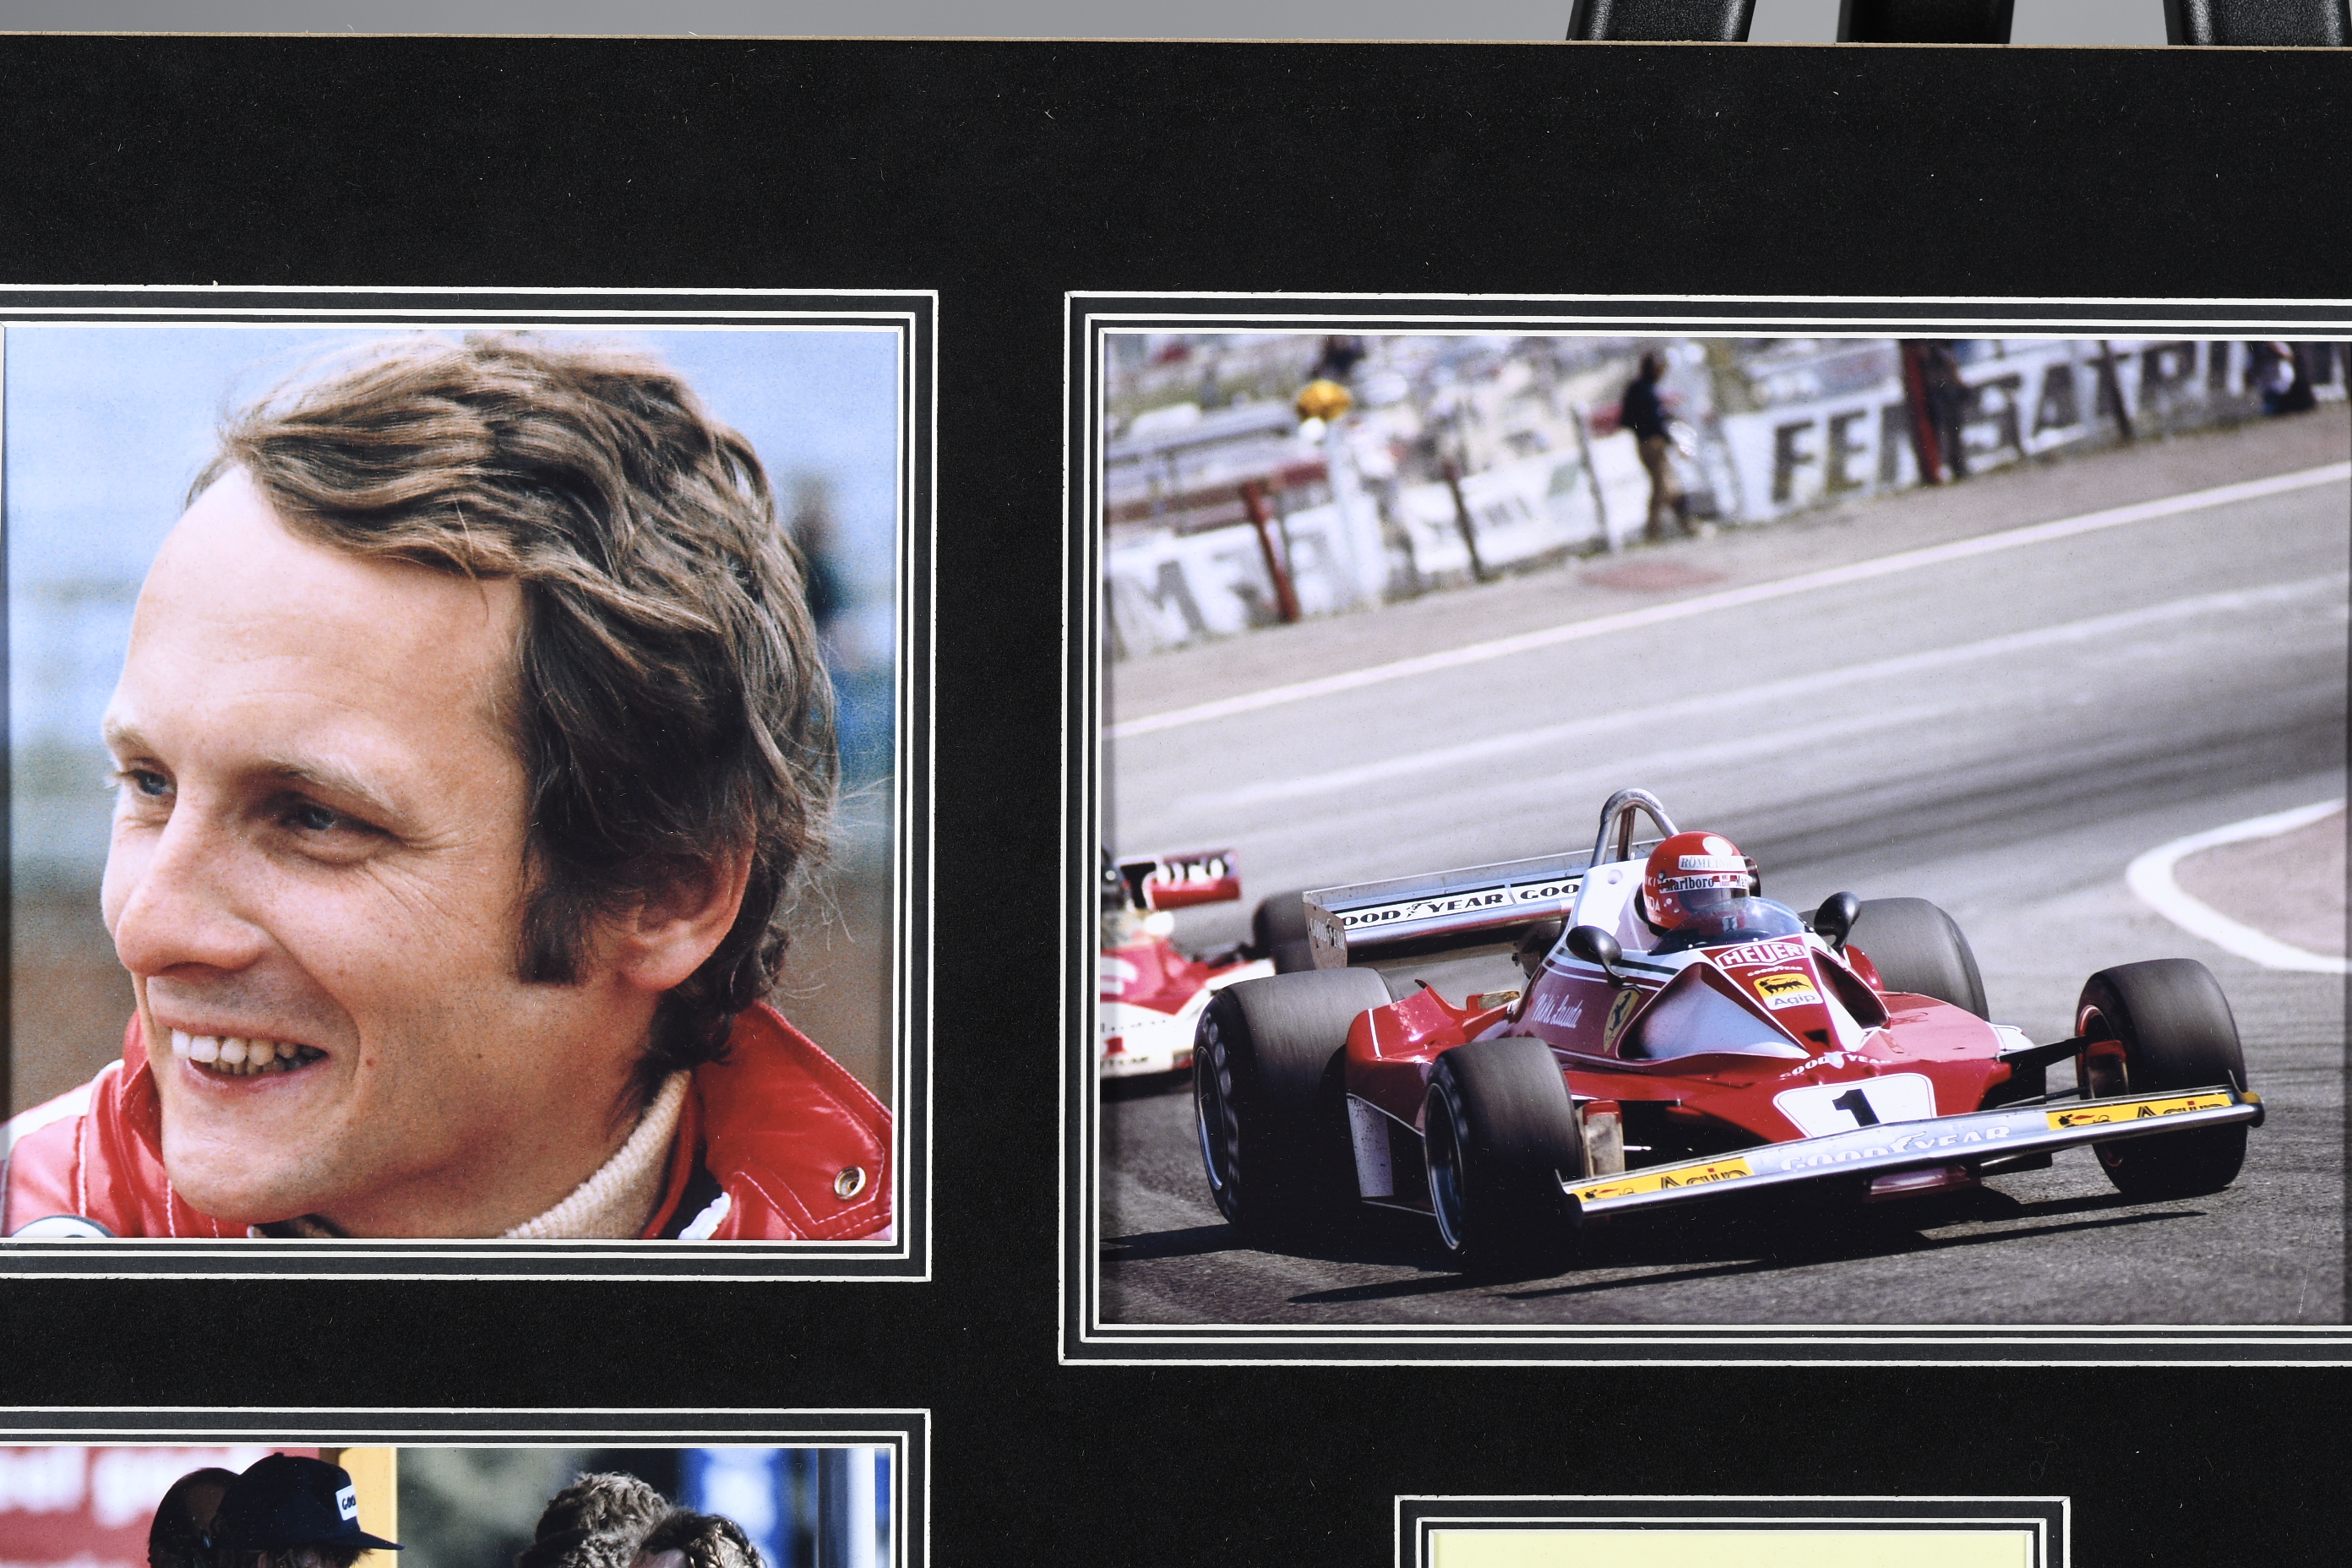 Niki Lauda - Image 3 of 3